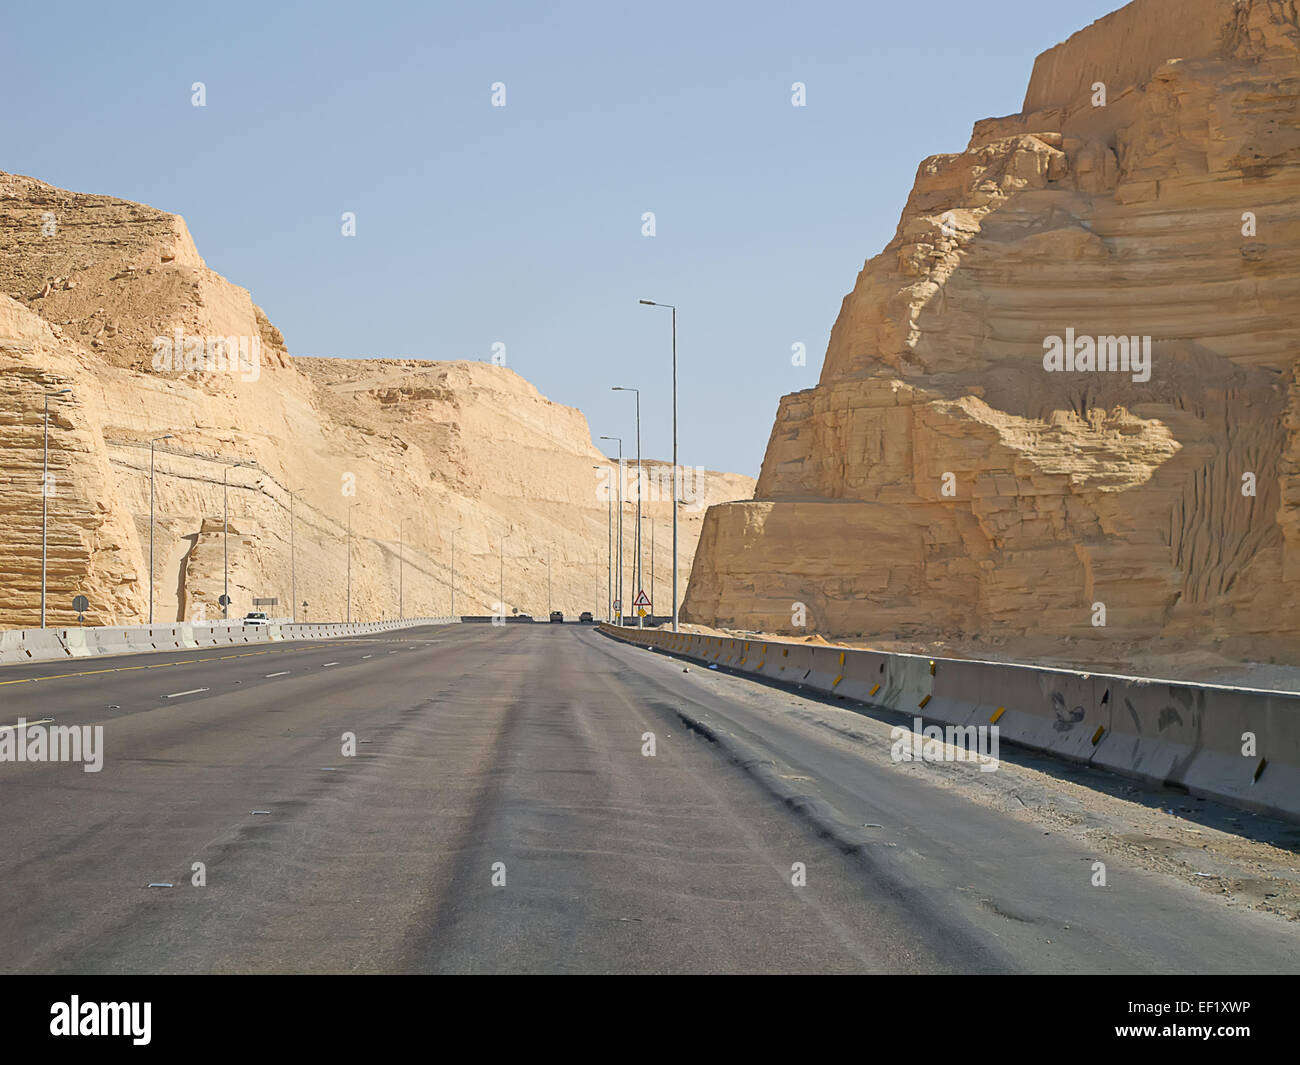 Clay rocks surrounding Riyadh city in Saudi Arabia Stock Photo